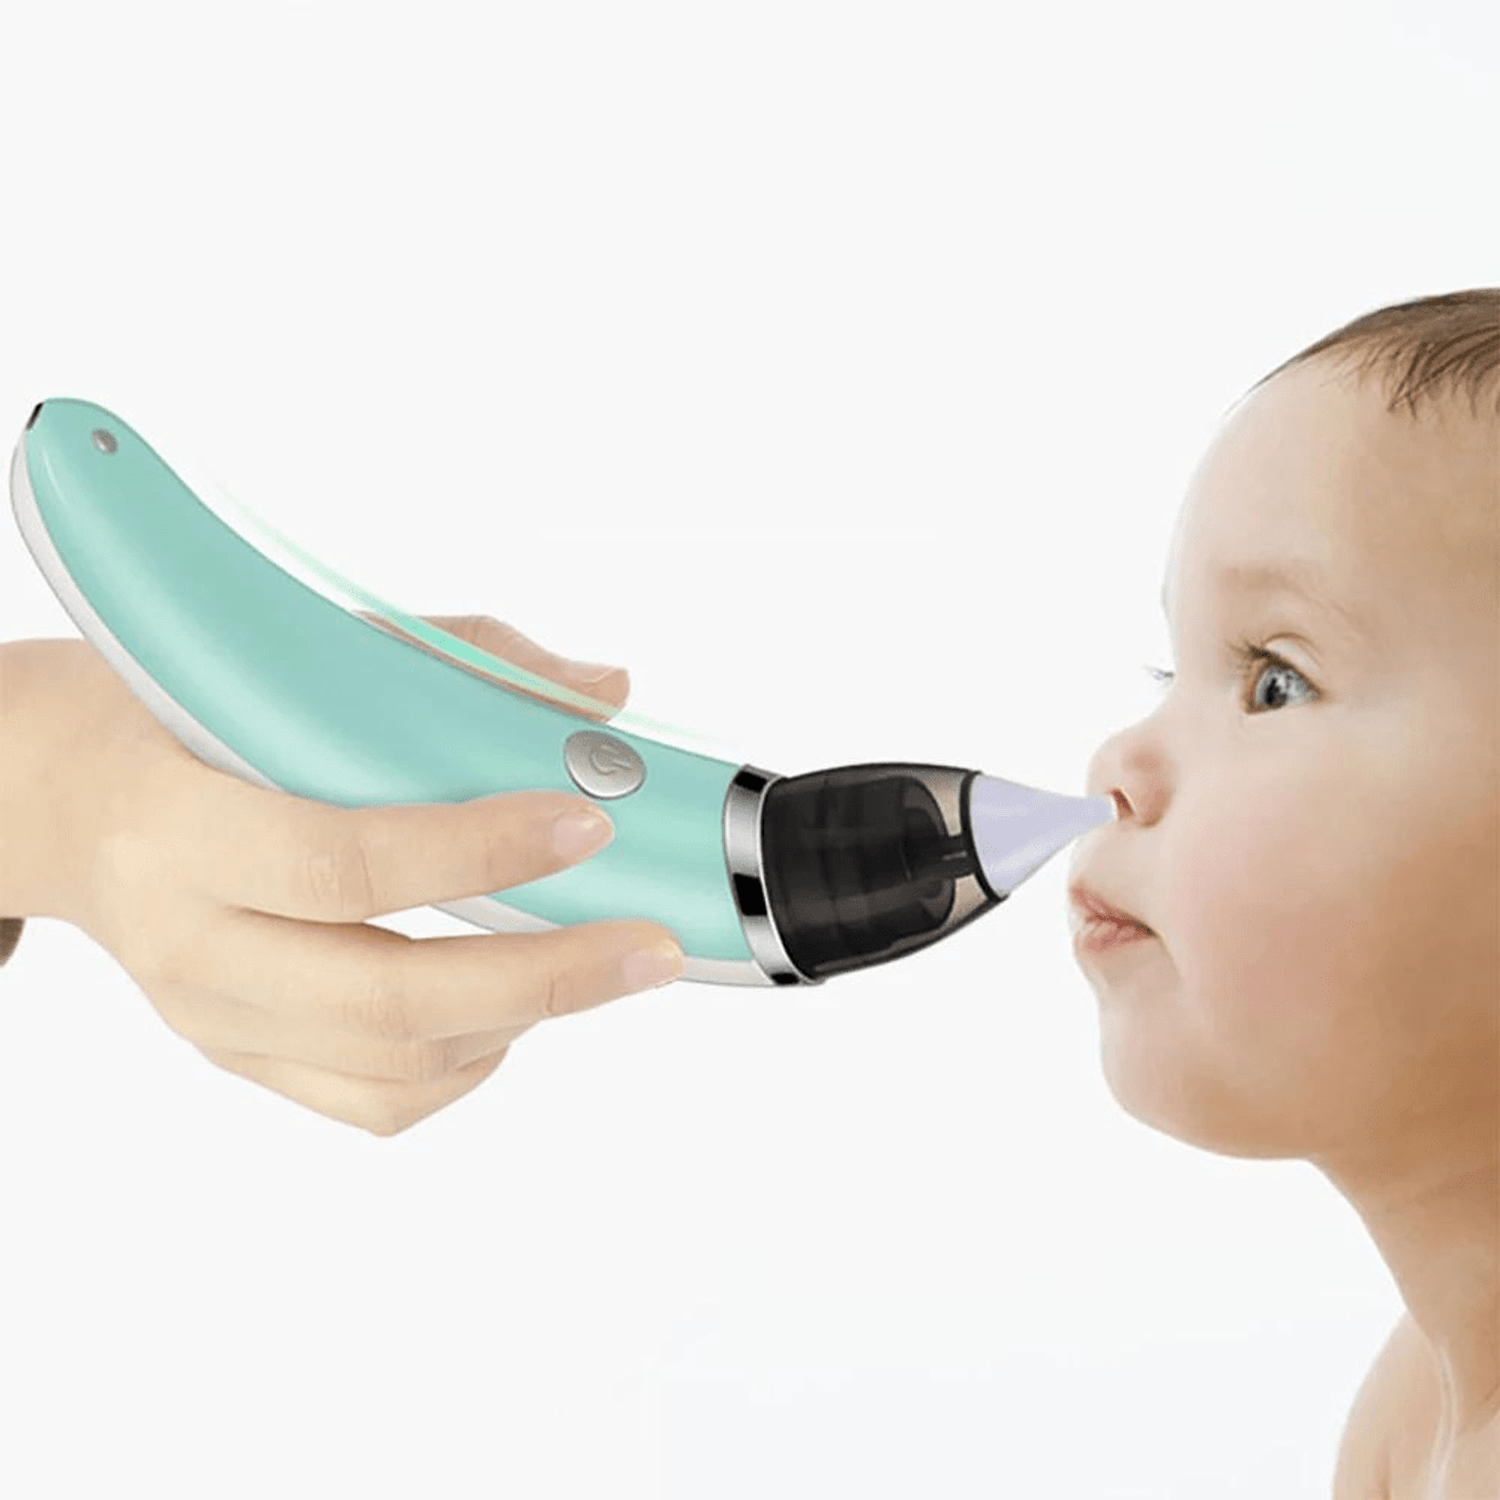 Aspirador nasal para bebés. Todo lo que necesitas saber